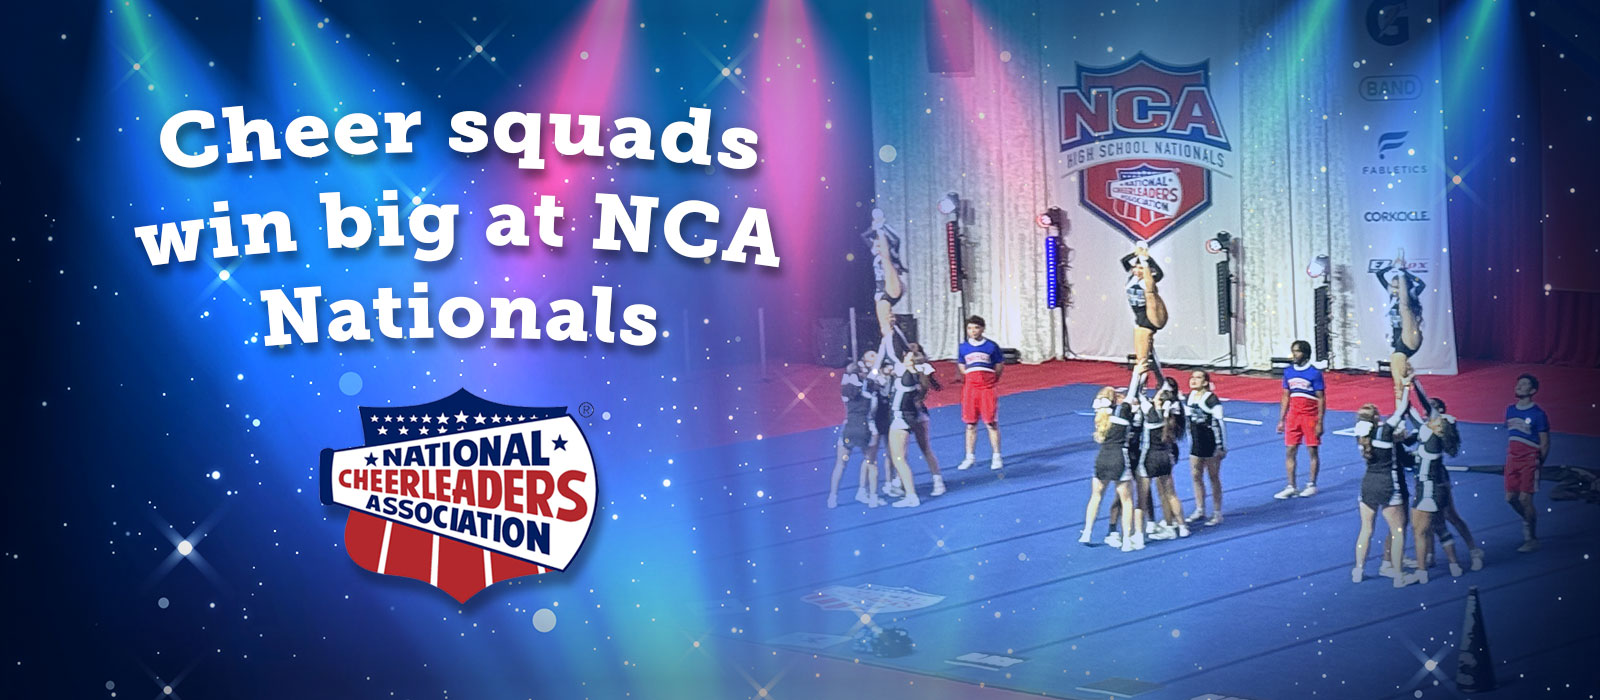 Cheer squads win big at NCA Nationals